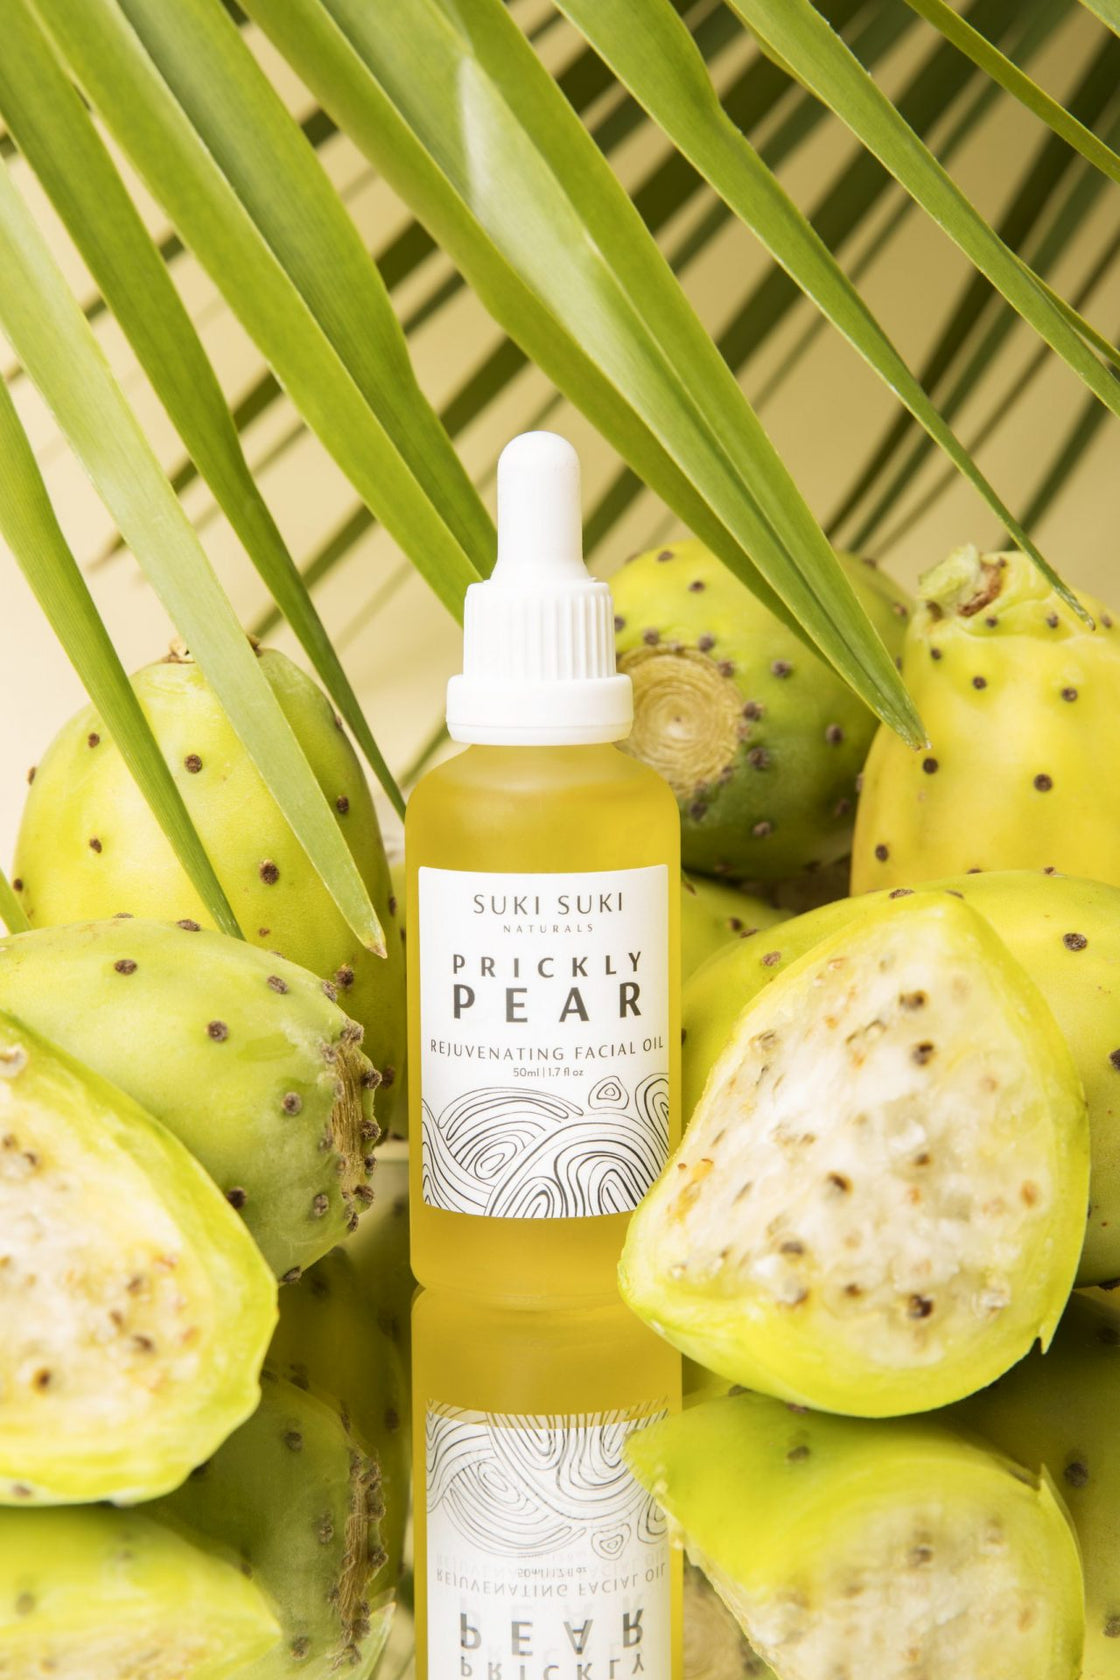 Suki Suki Naturals | Prickly Pear Rejuvenating Facial Oil